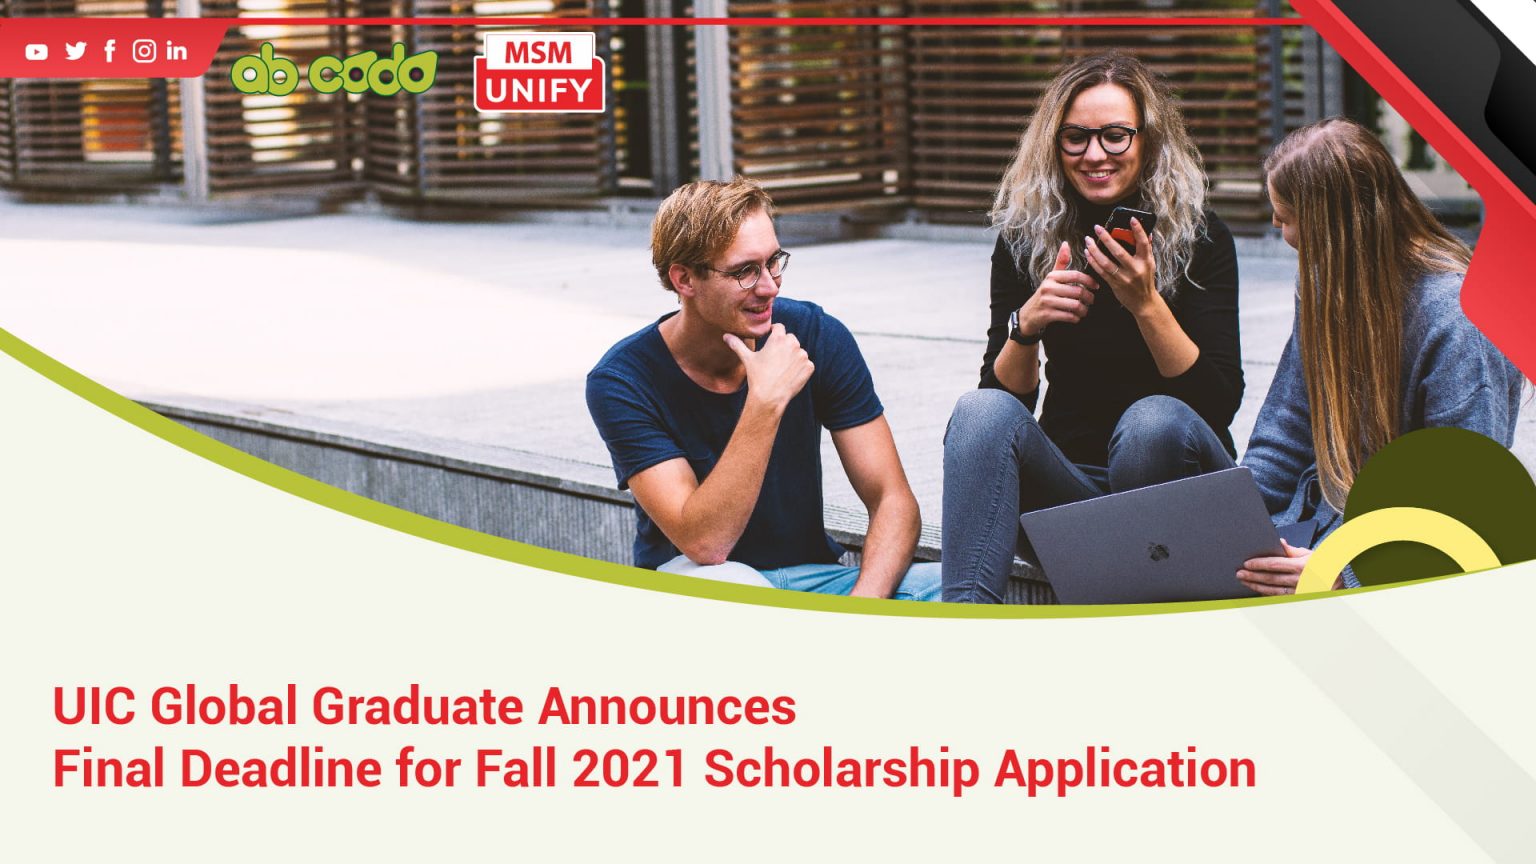 UIC Global Graduate Announces Final Deadline for Fall 2021 Scholarship